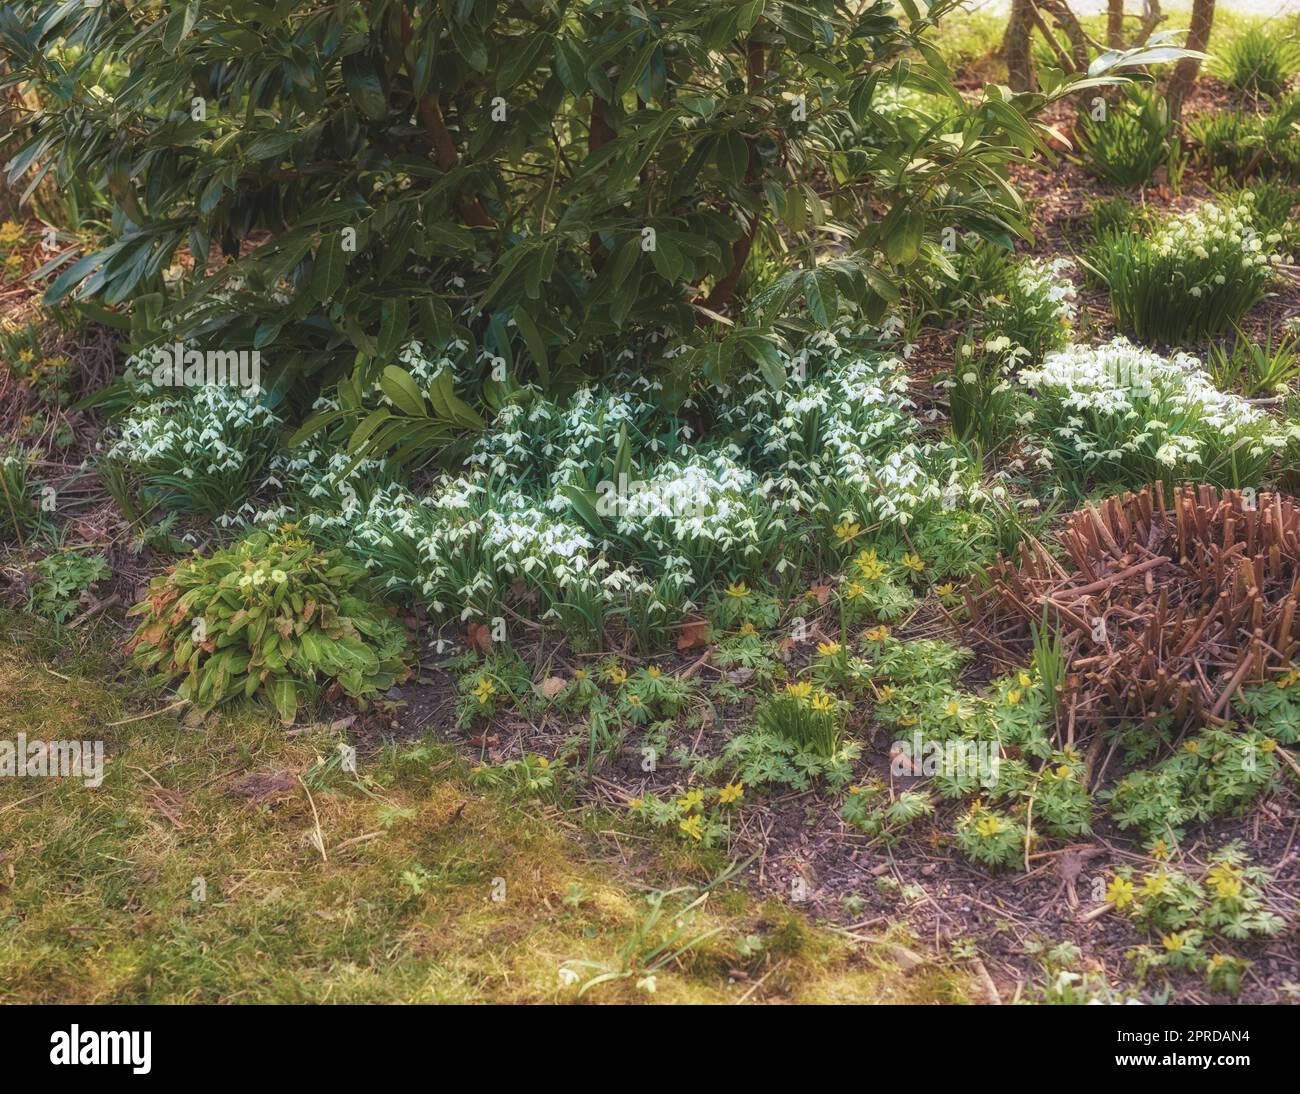 Common snowdrop - Galanthus nivalis Stock Photo